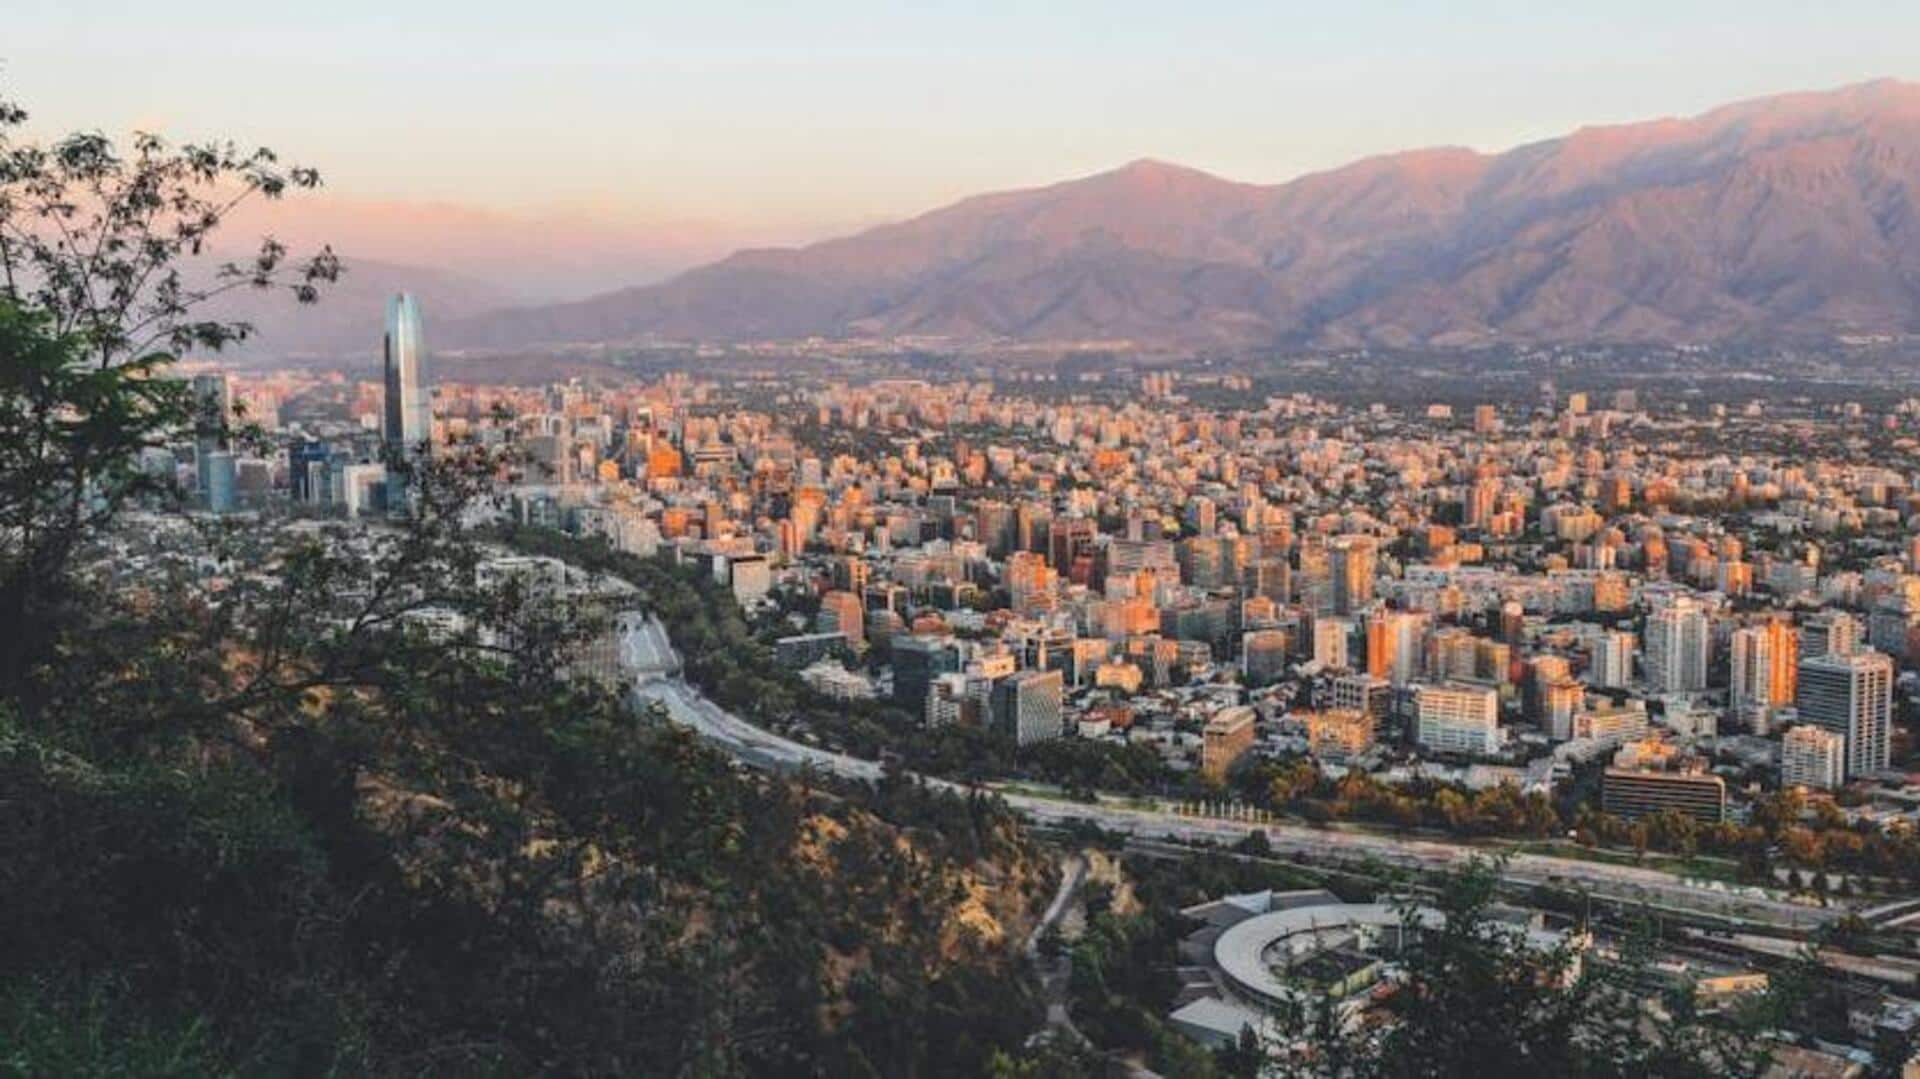 Santiago's hidden green havens are worth a trip